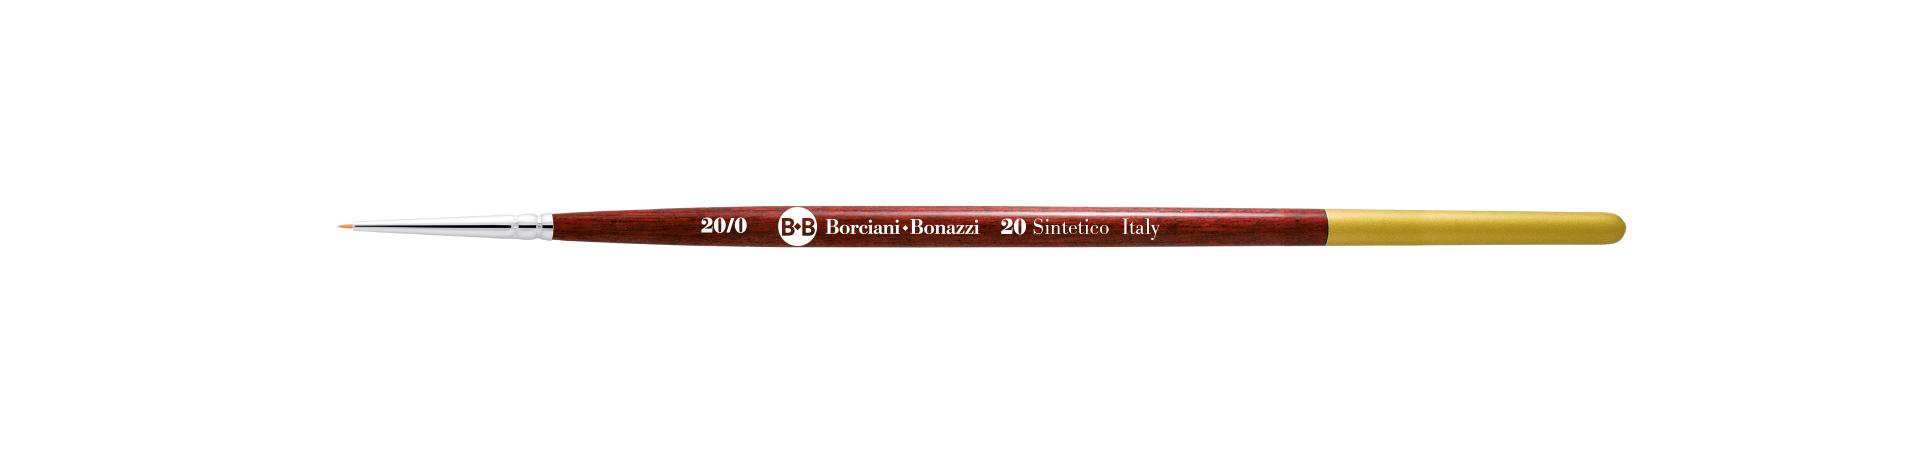 Brush Calligraphy: brushes for small details series 20 - Borciani e Bonazzi